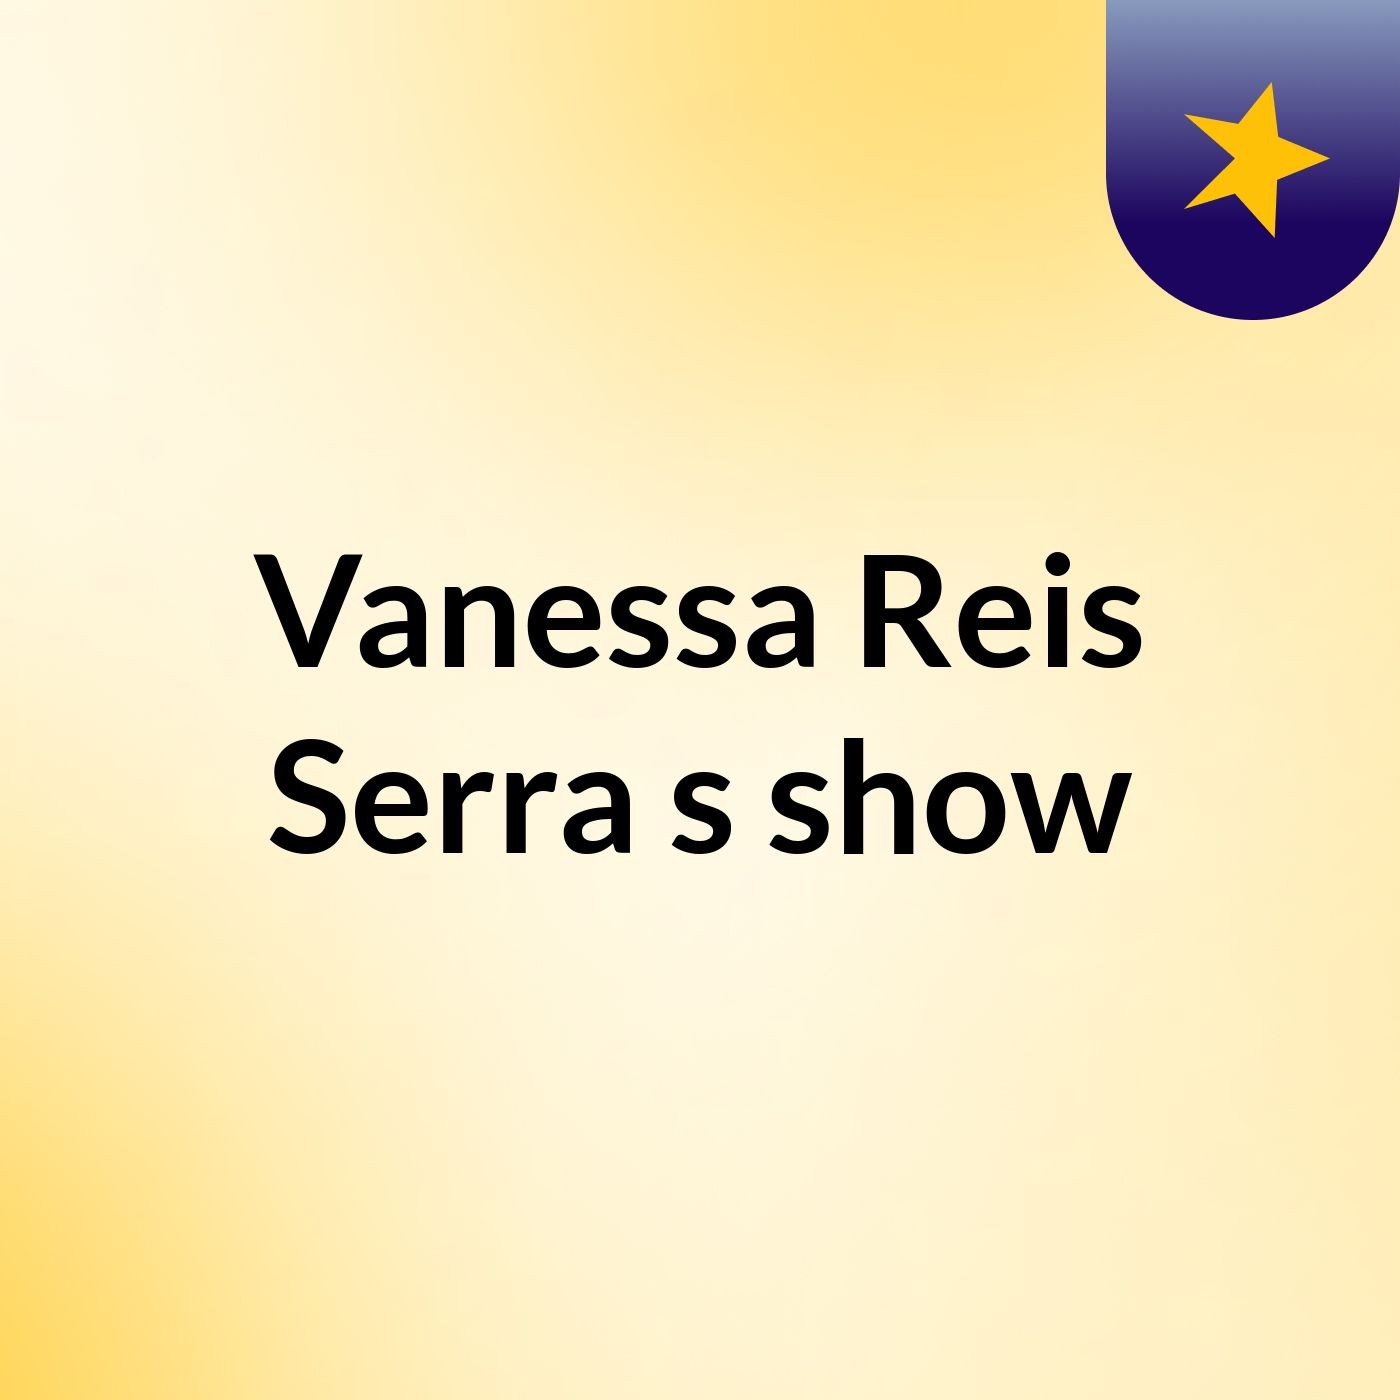 Vanessa Reis Serra's show